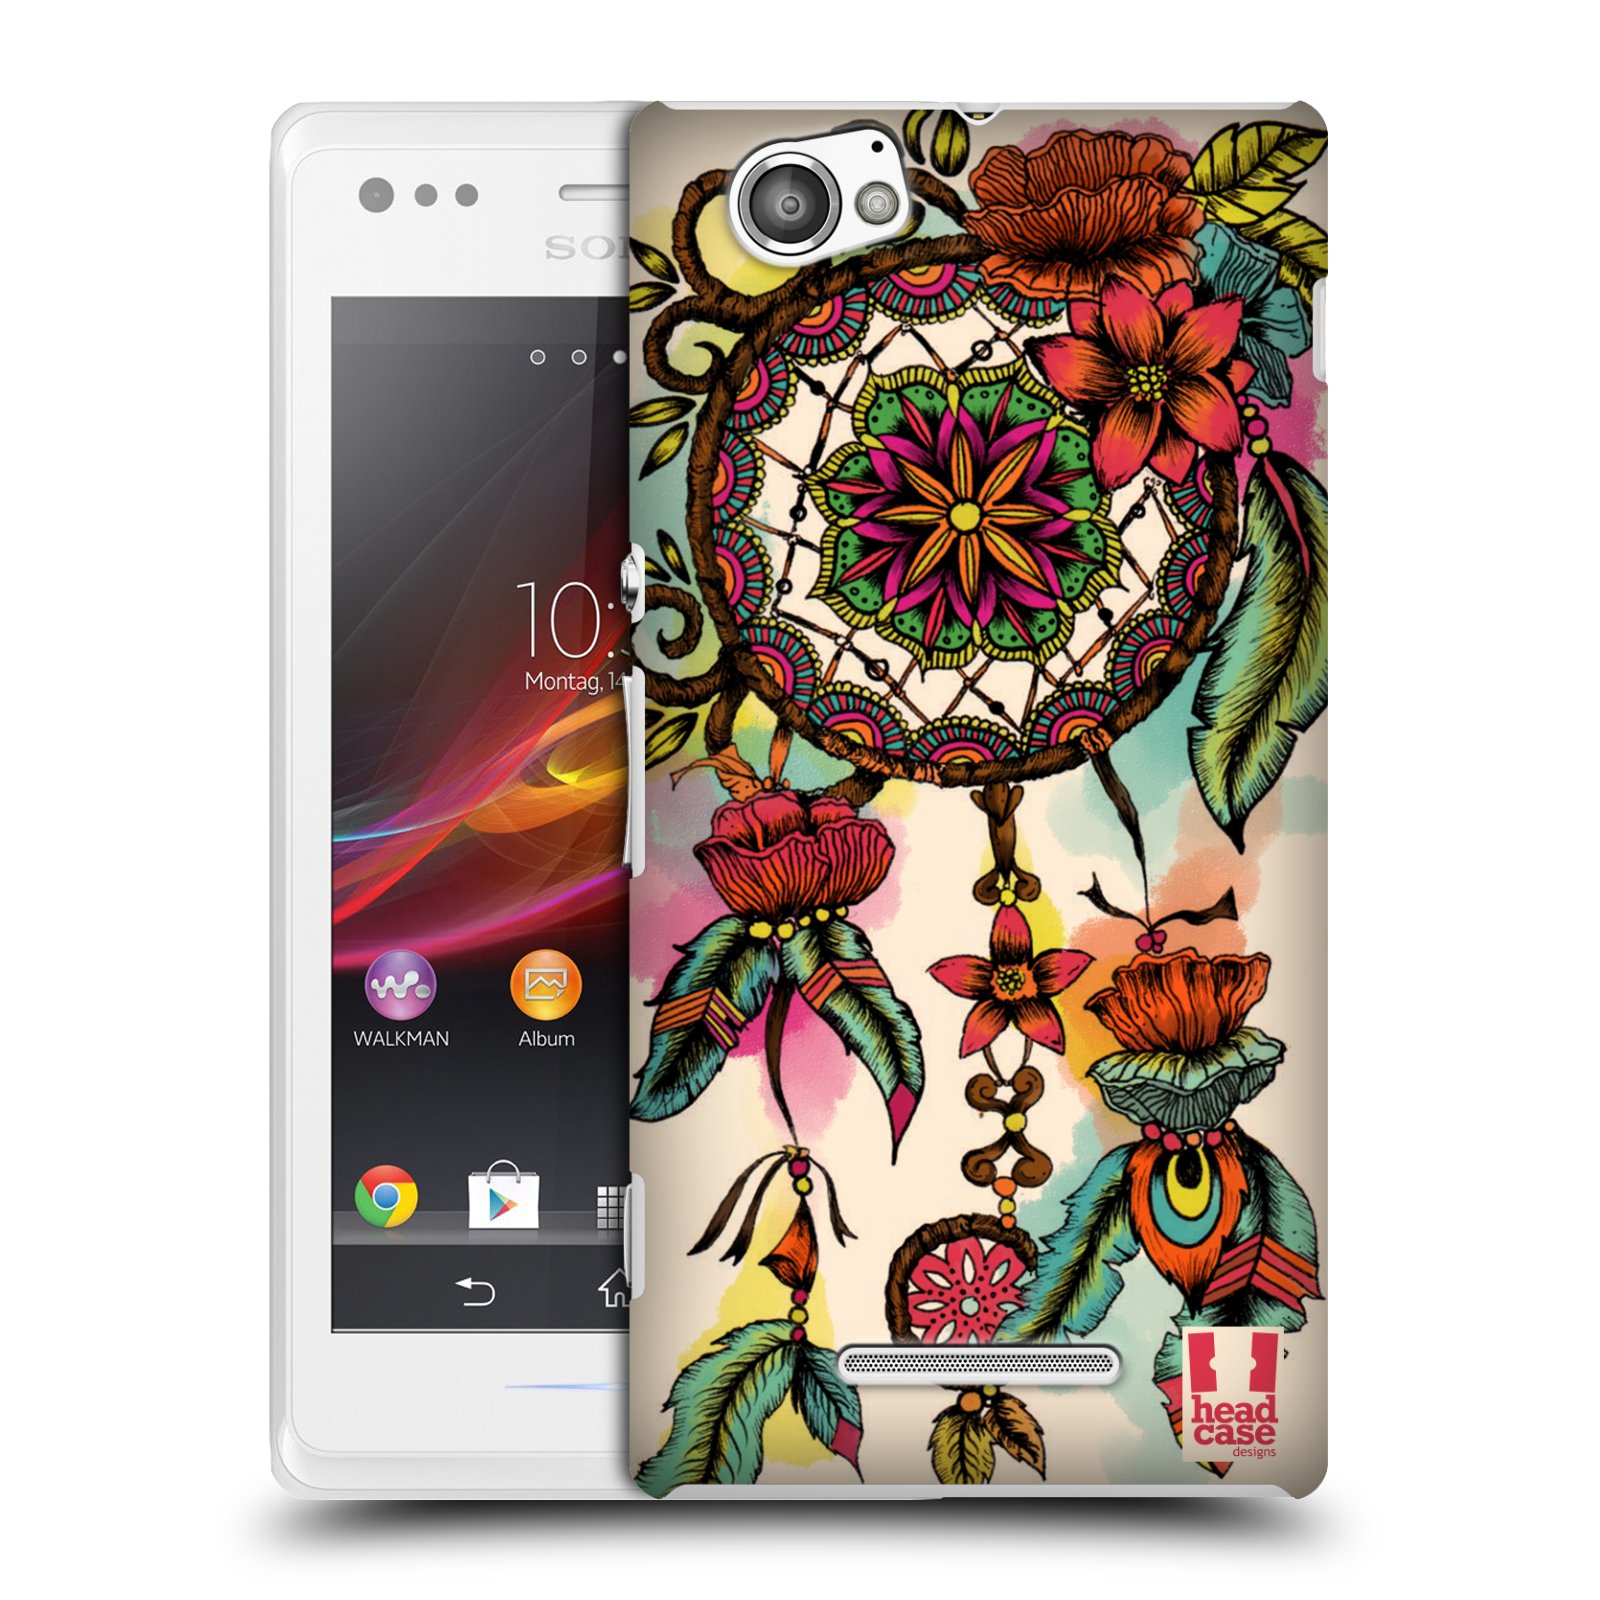 HEAD CASE plastový obal na mobil Sony Xperia M vzor Květy lapač snů FLORID